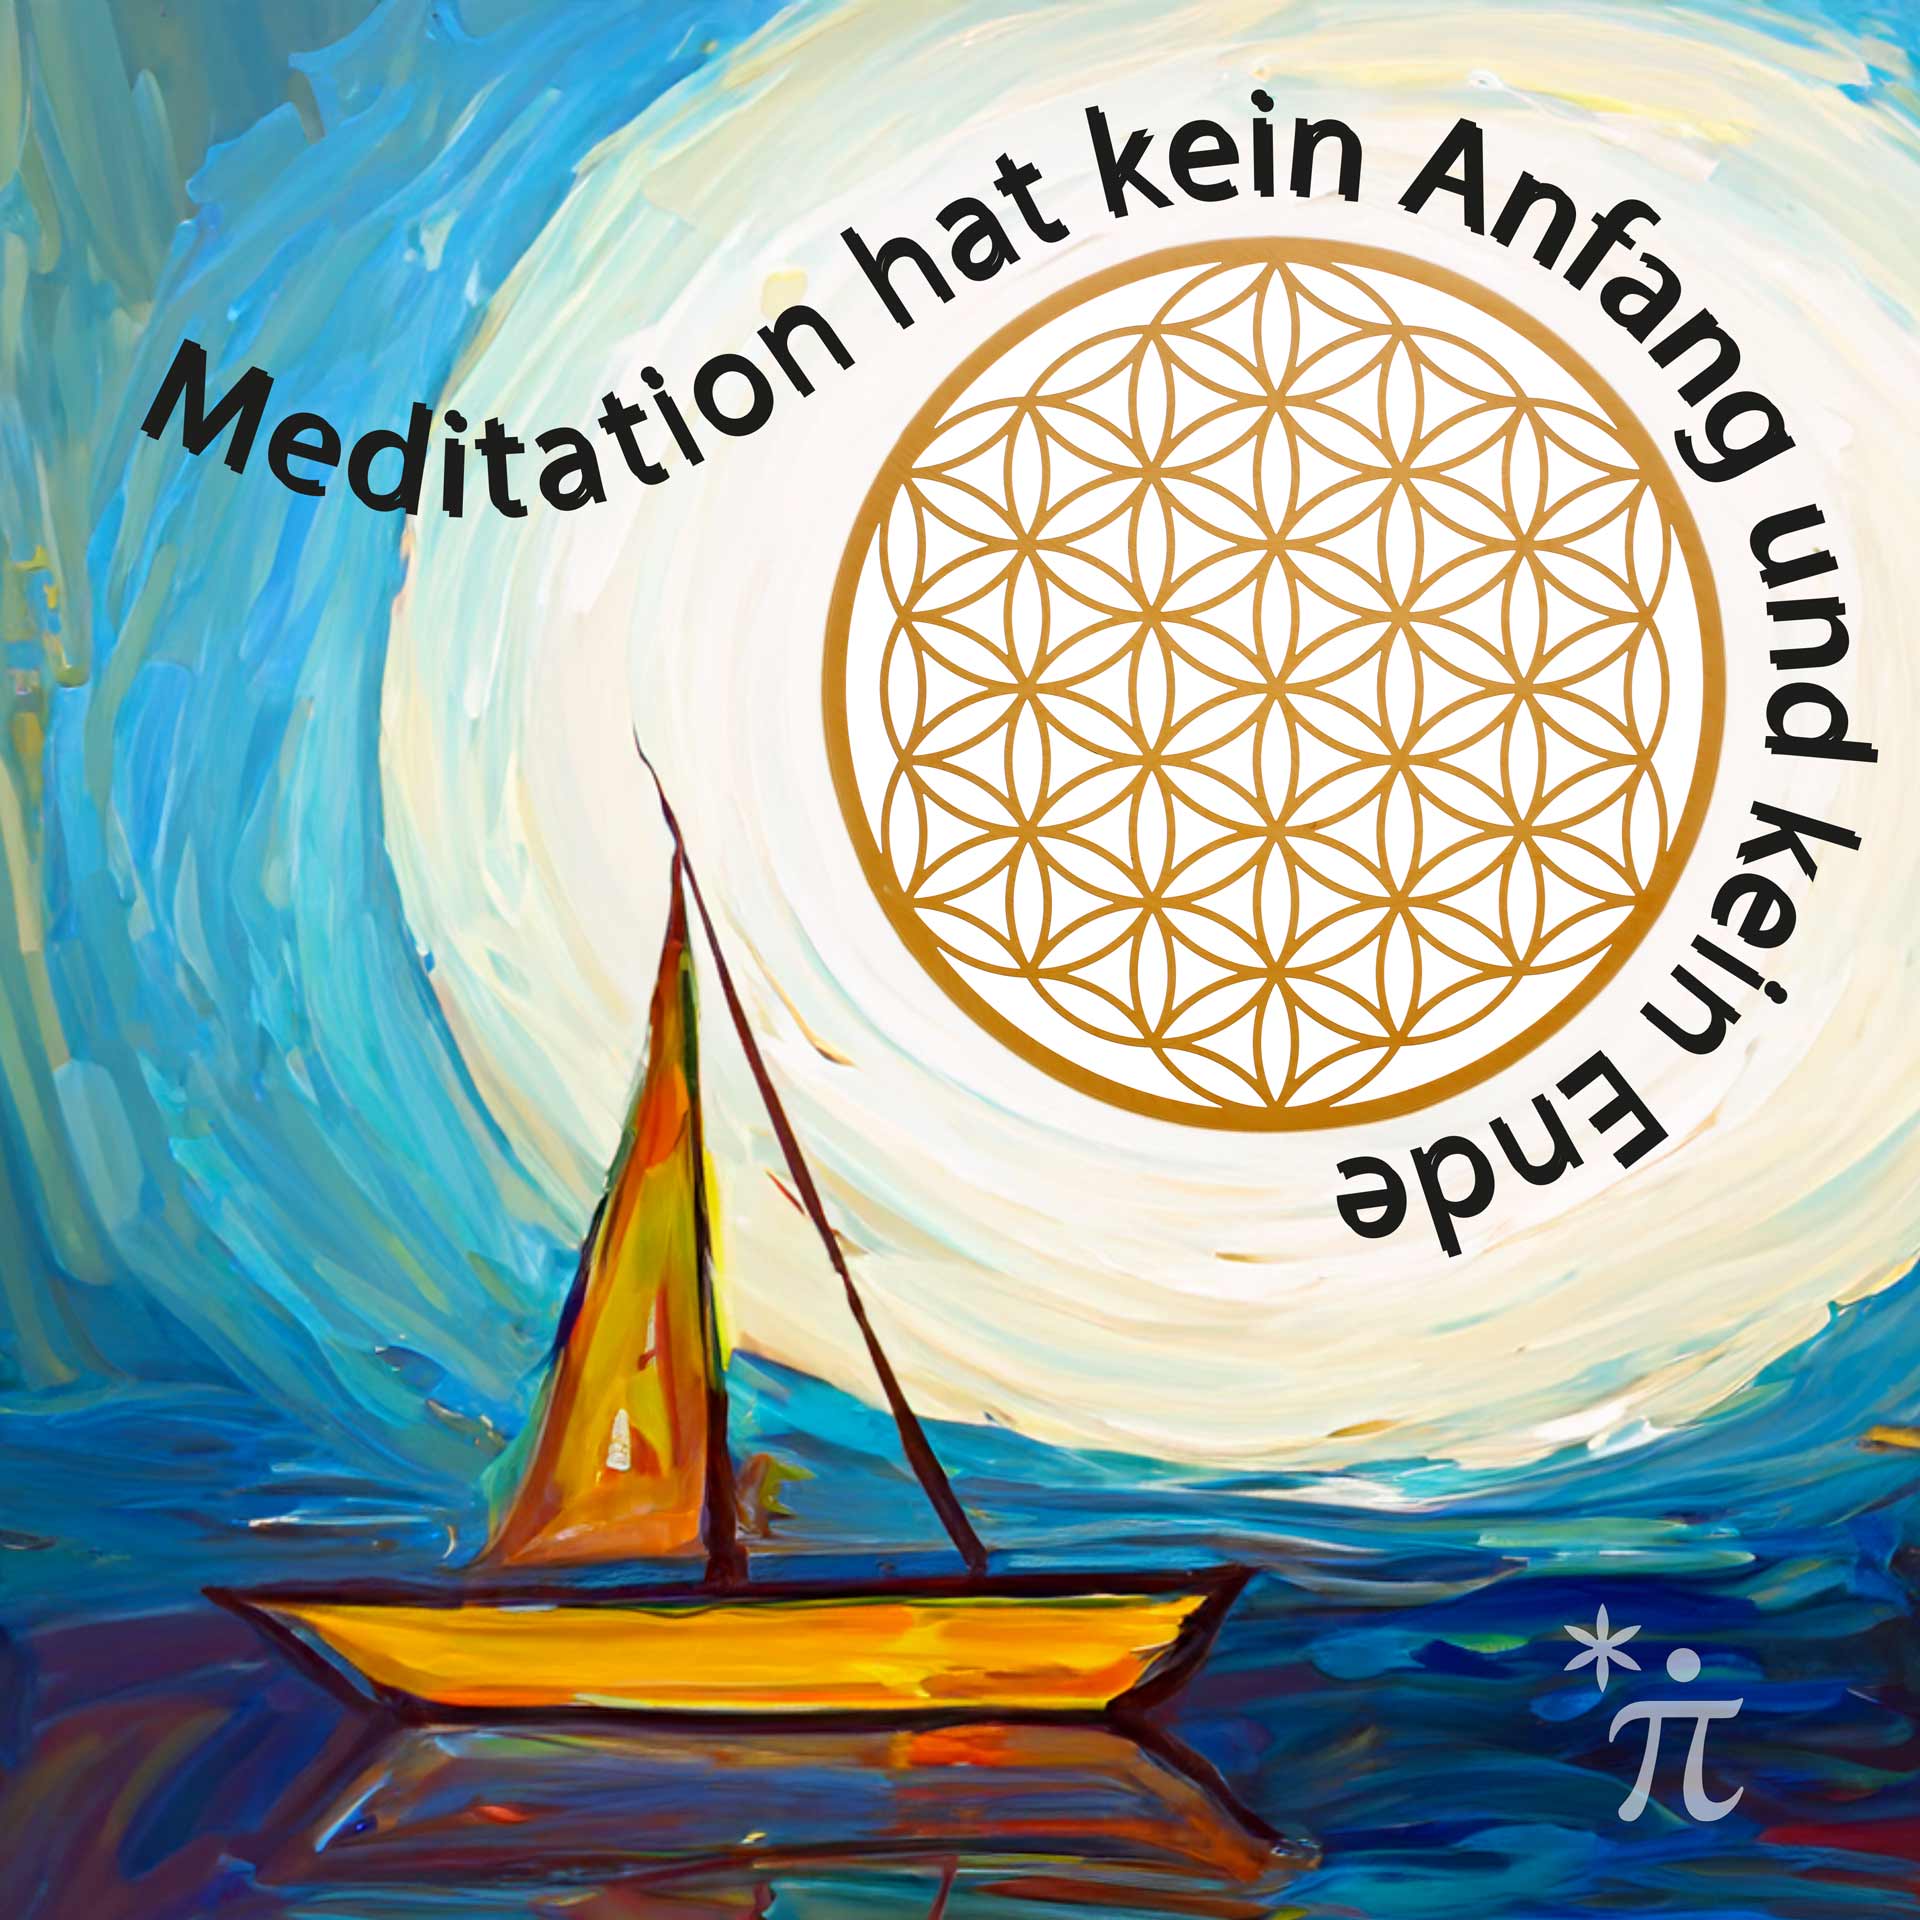 Meditation hat kein Anfang und kein Ende